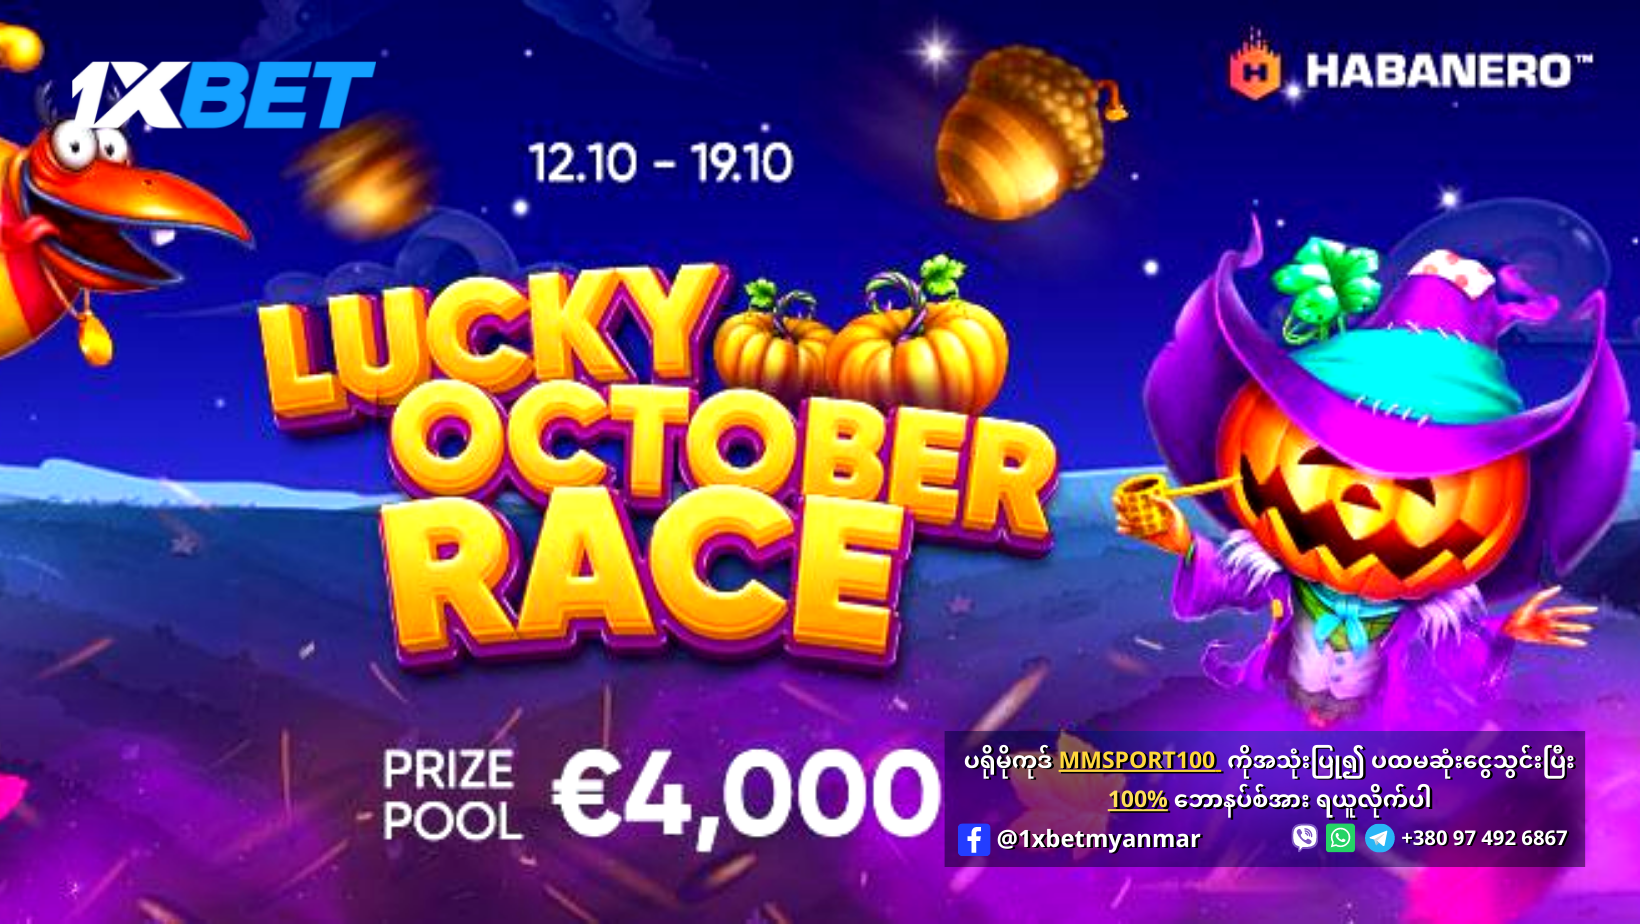 Lucky October Race Offer